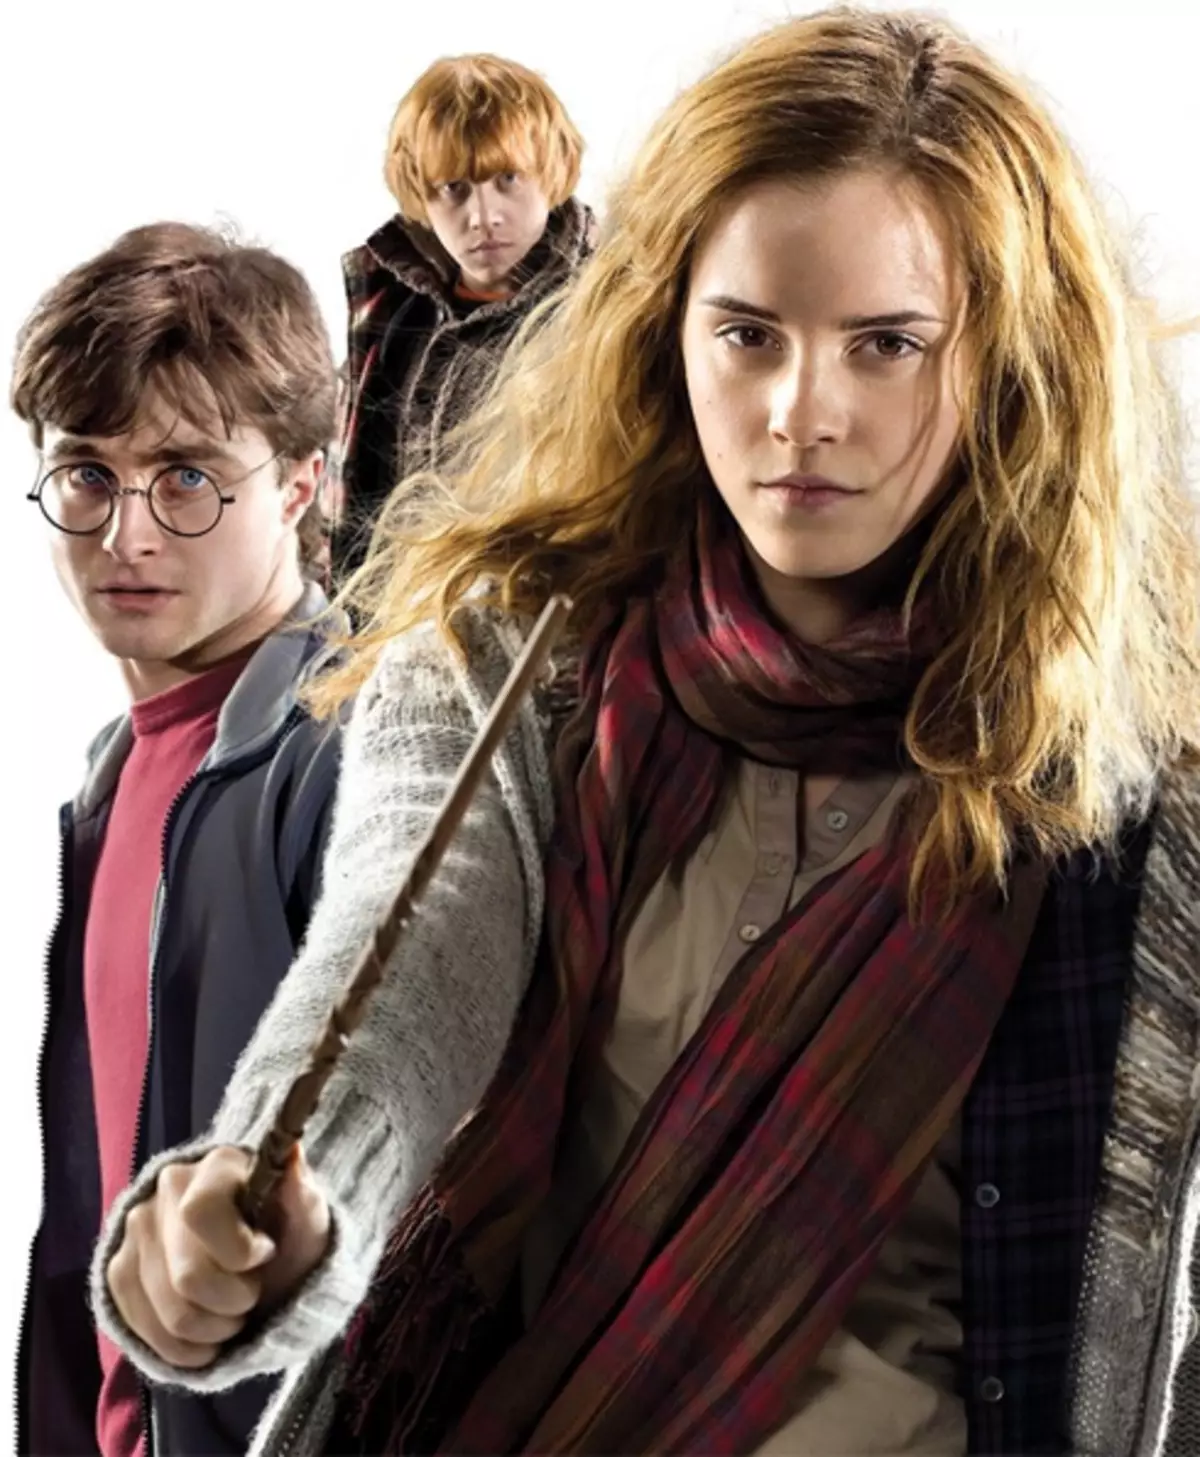 Emma Watson, დანიელ Radcliffe და რუპერტ მწვანე და დარჩა აუდიტორიის პირველ რიგში Wizards საწყისი ჰარი პოტერი